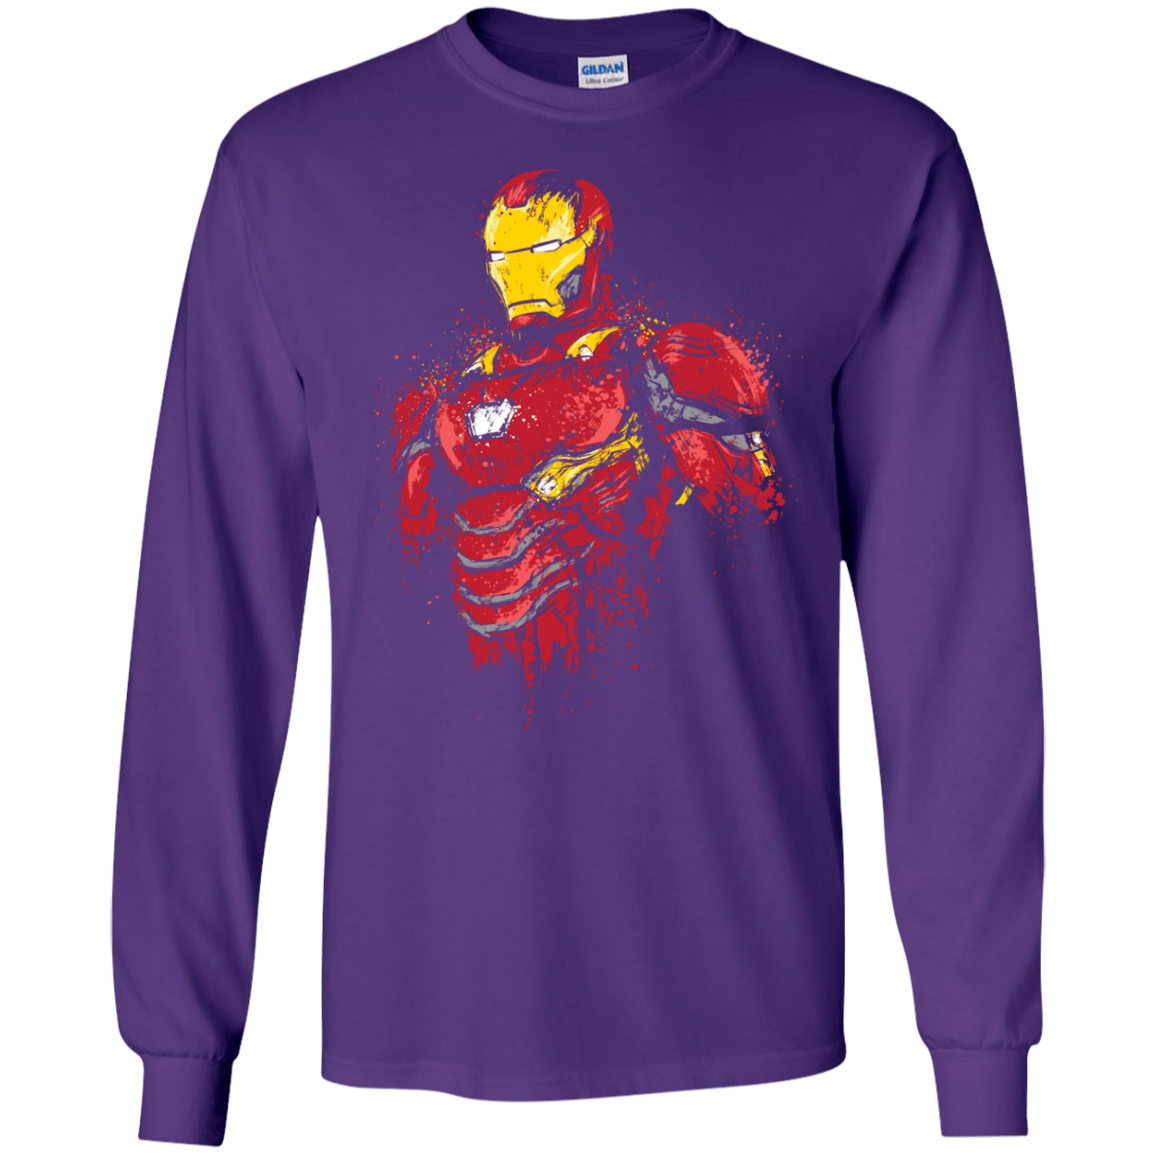 T-Shirts Purple / S Infinity Iron Men's Long Sleeve T-Shirt